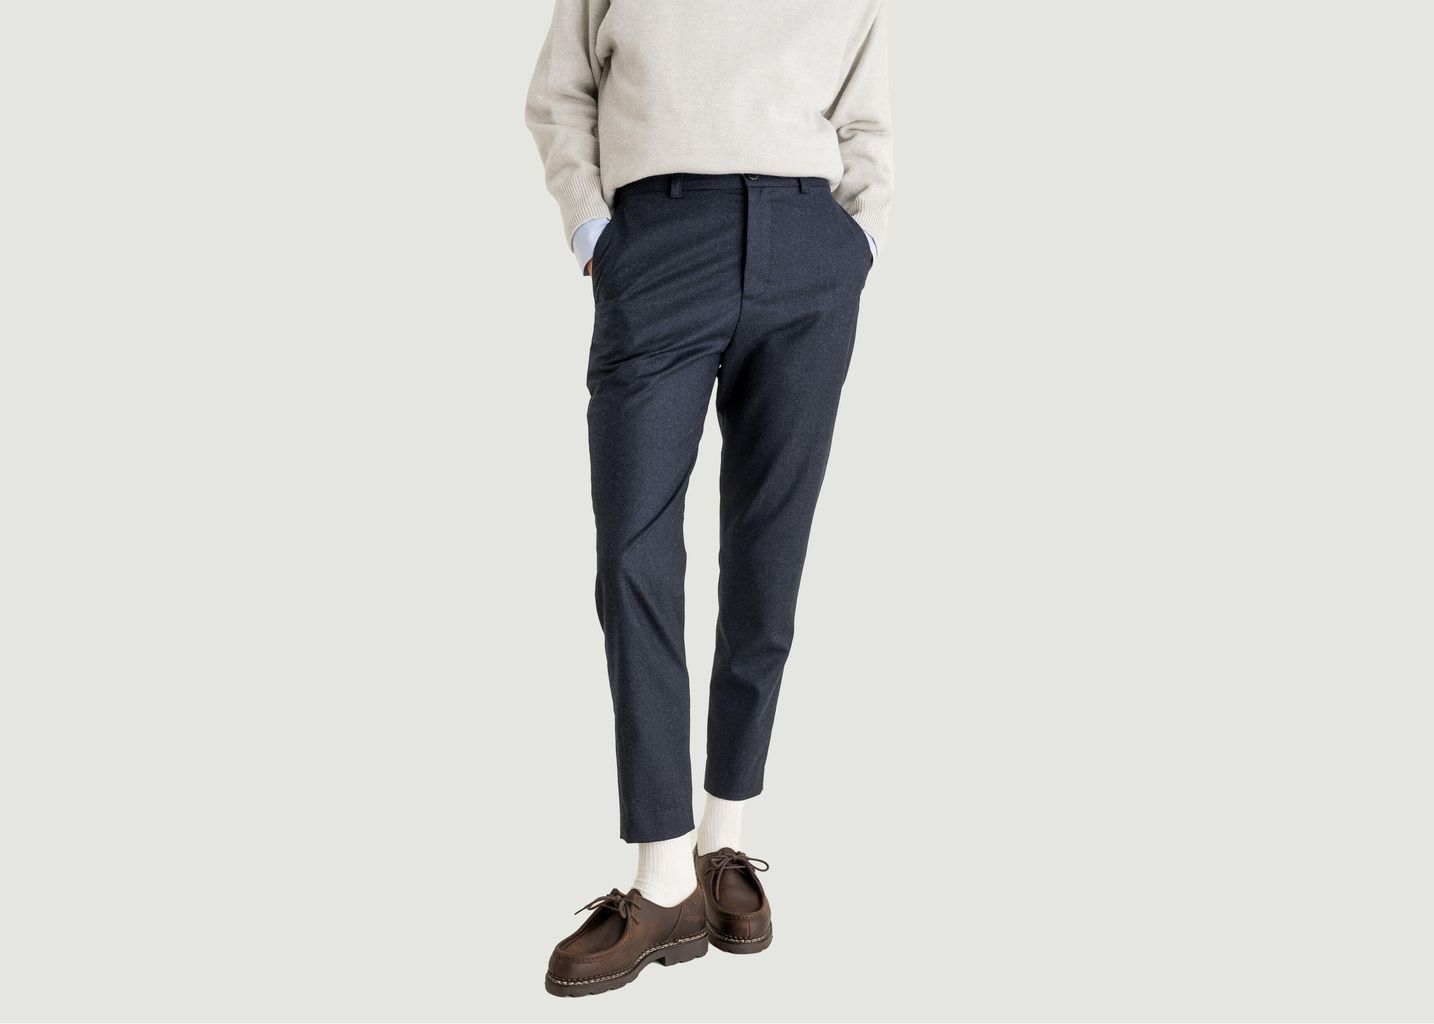 Stockholm trousers - noyoco